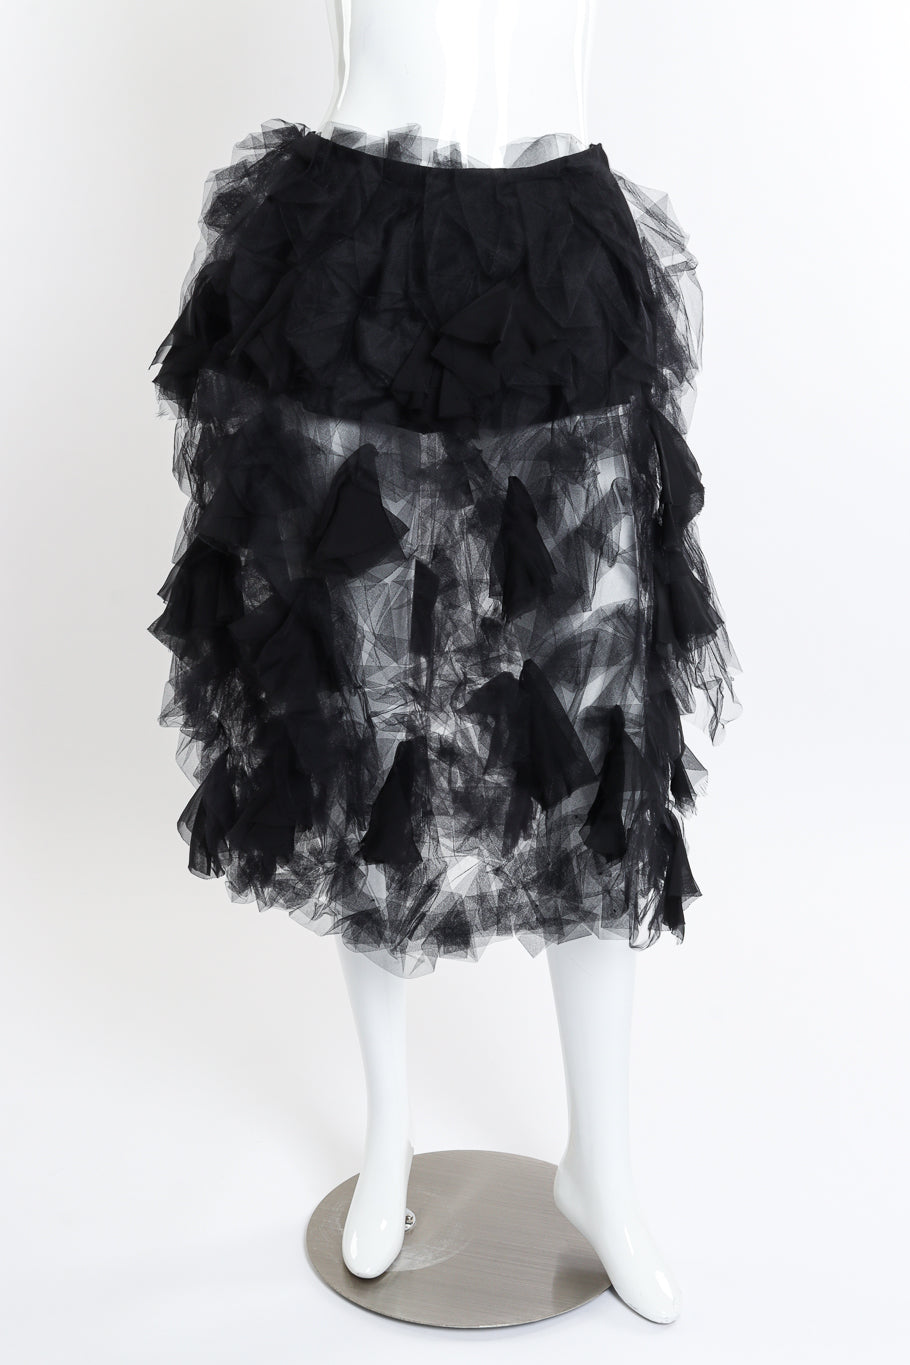 Salvatore Ferragamo Ruched Tulle Skirt front on mannequin @recessla